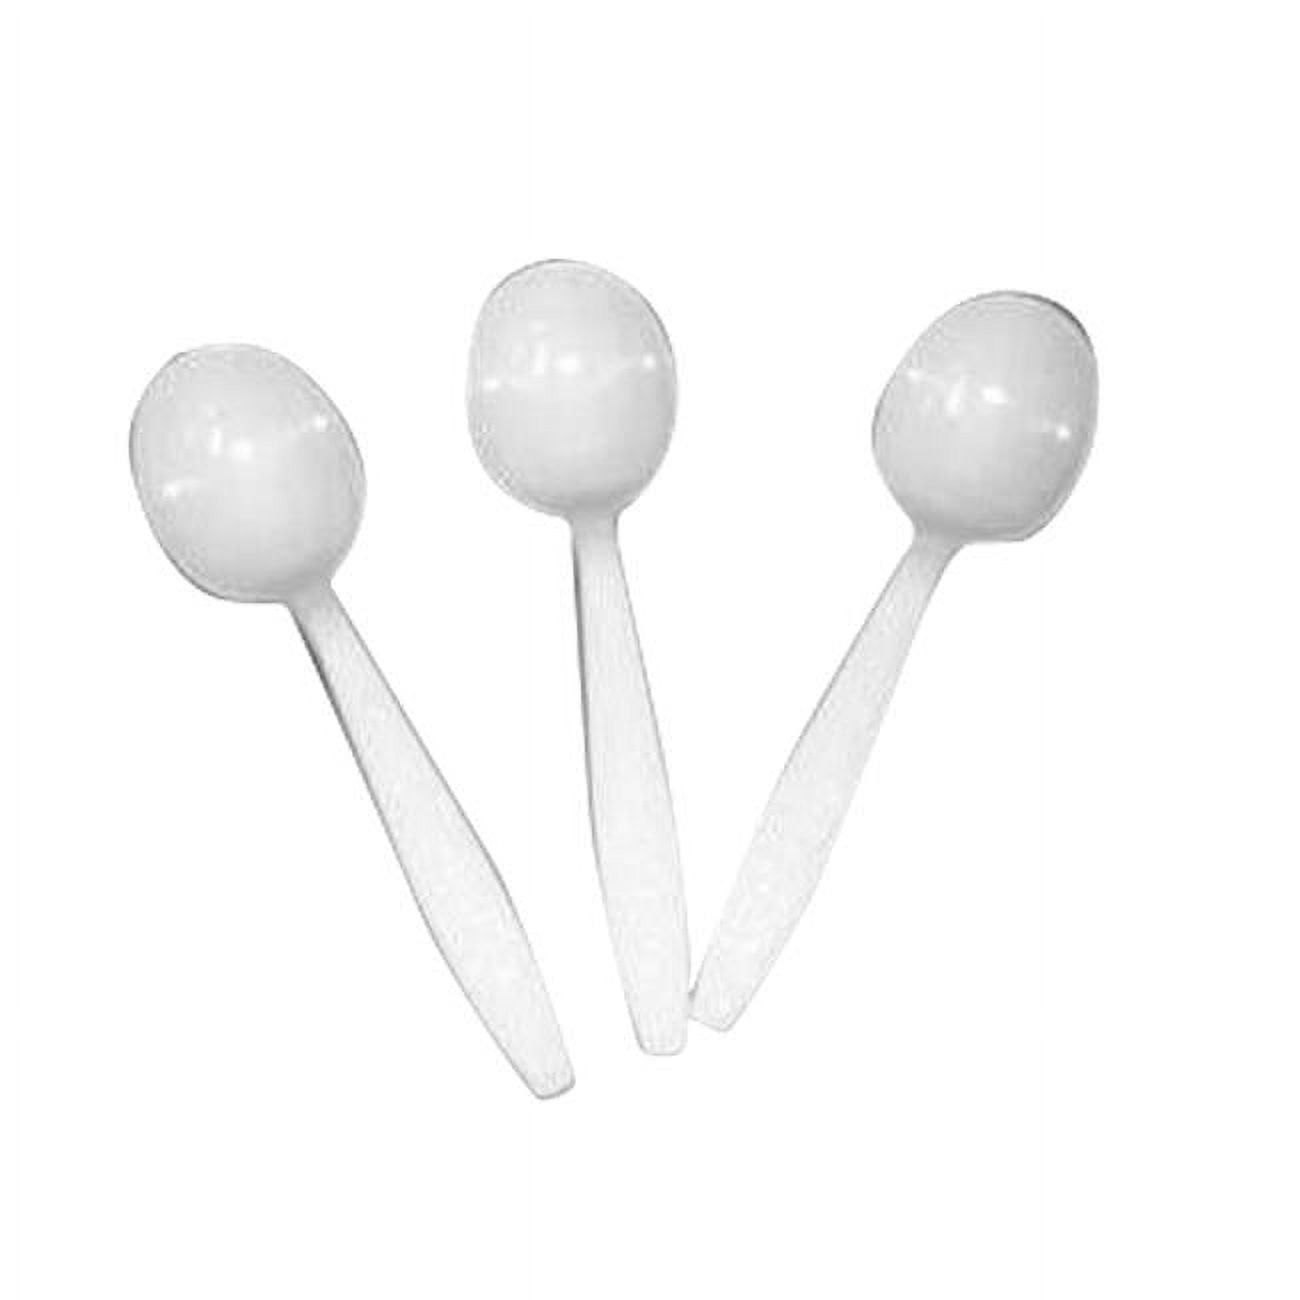 406020 Pec White Medweight Polypropylene Bulk Stainless Spoons - Pack Of 1000